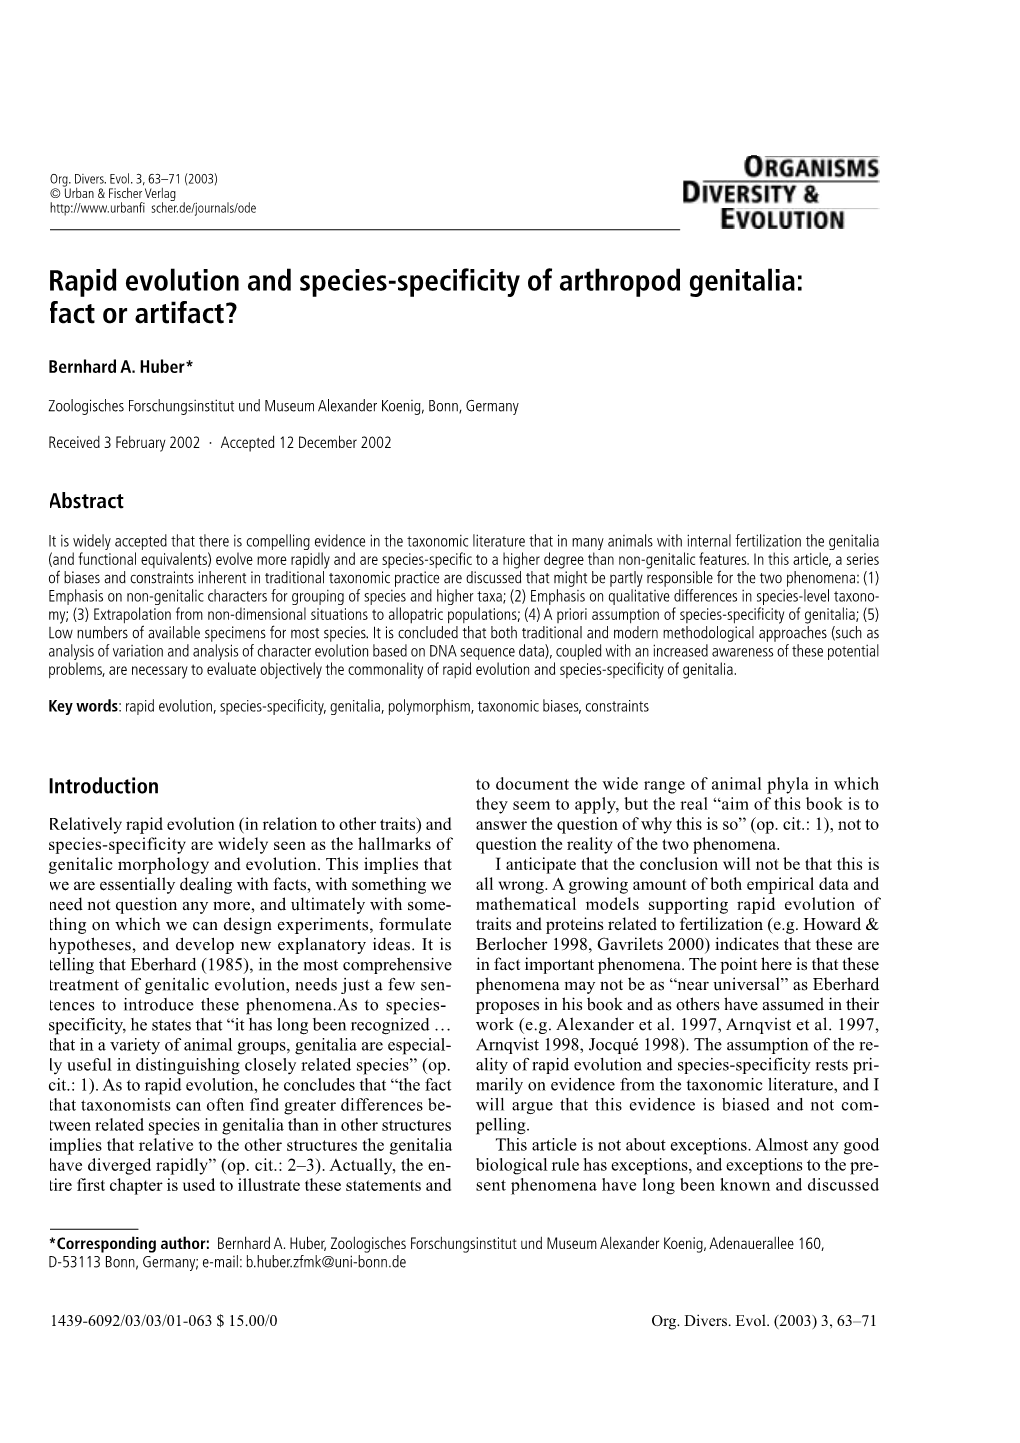 Rapid Evolution and Species-Specificity of Arthropod Genitalia: Fact Or Artifact?